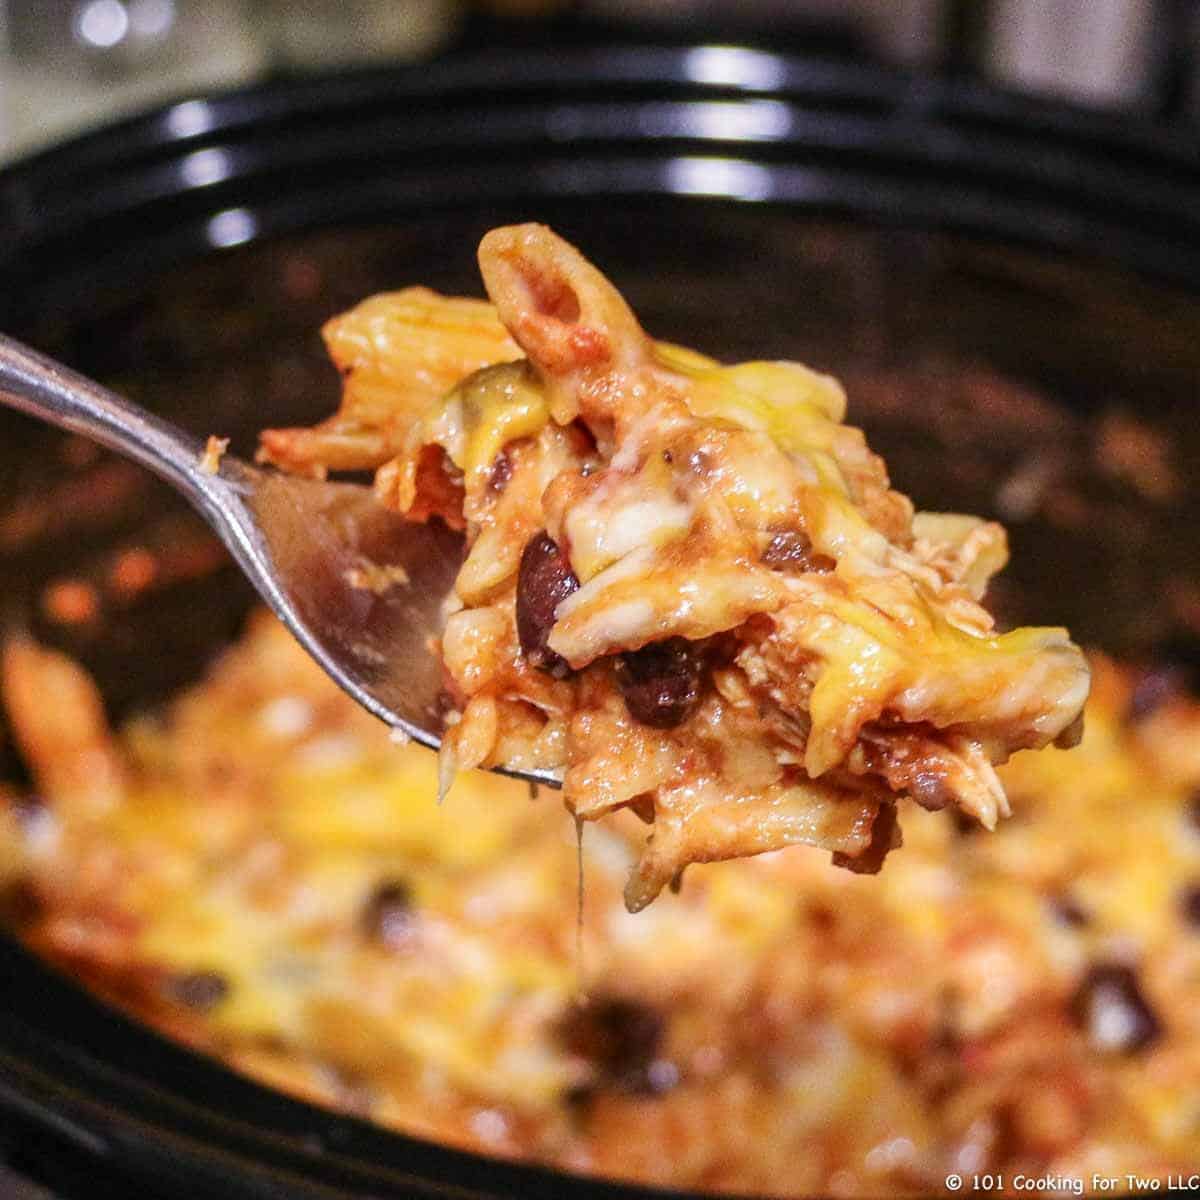 https://www.101cookingfortwo.com/wp-content/uploads/2014/11/cheesy-southwest-casserole-on-spoon-B.jpg